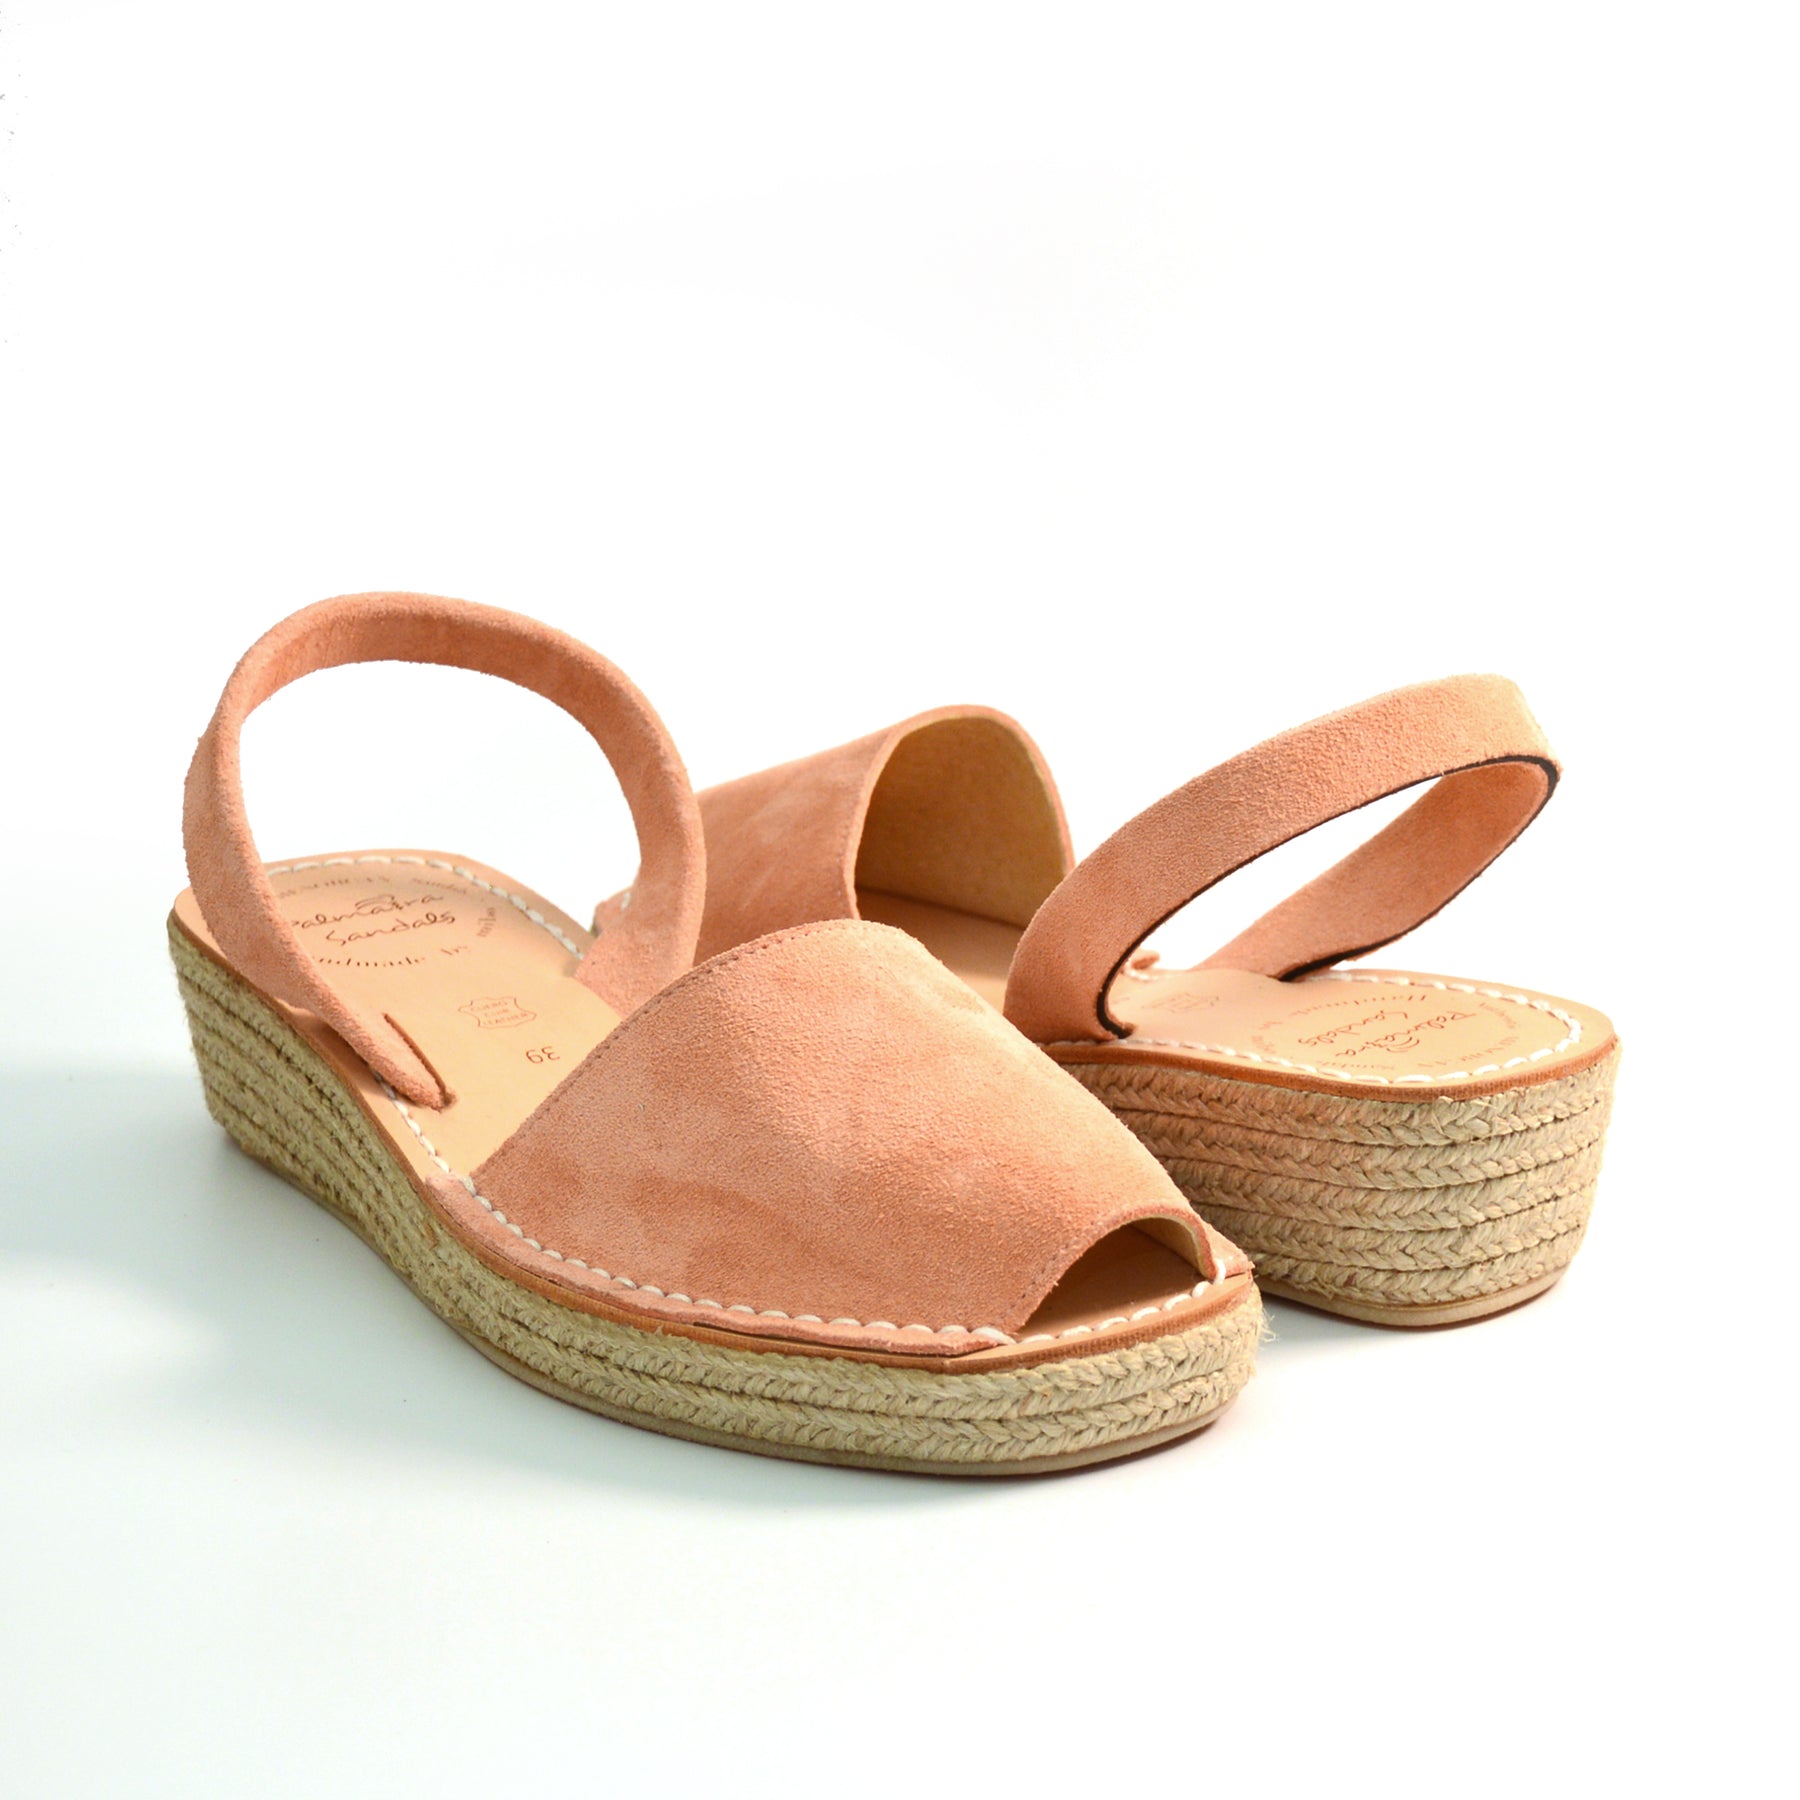 peach blush suede low espadrille wedge avarcas menorcan sandals